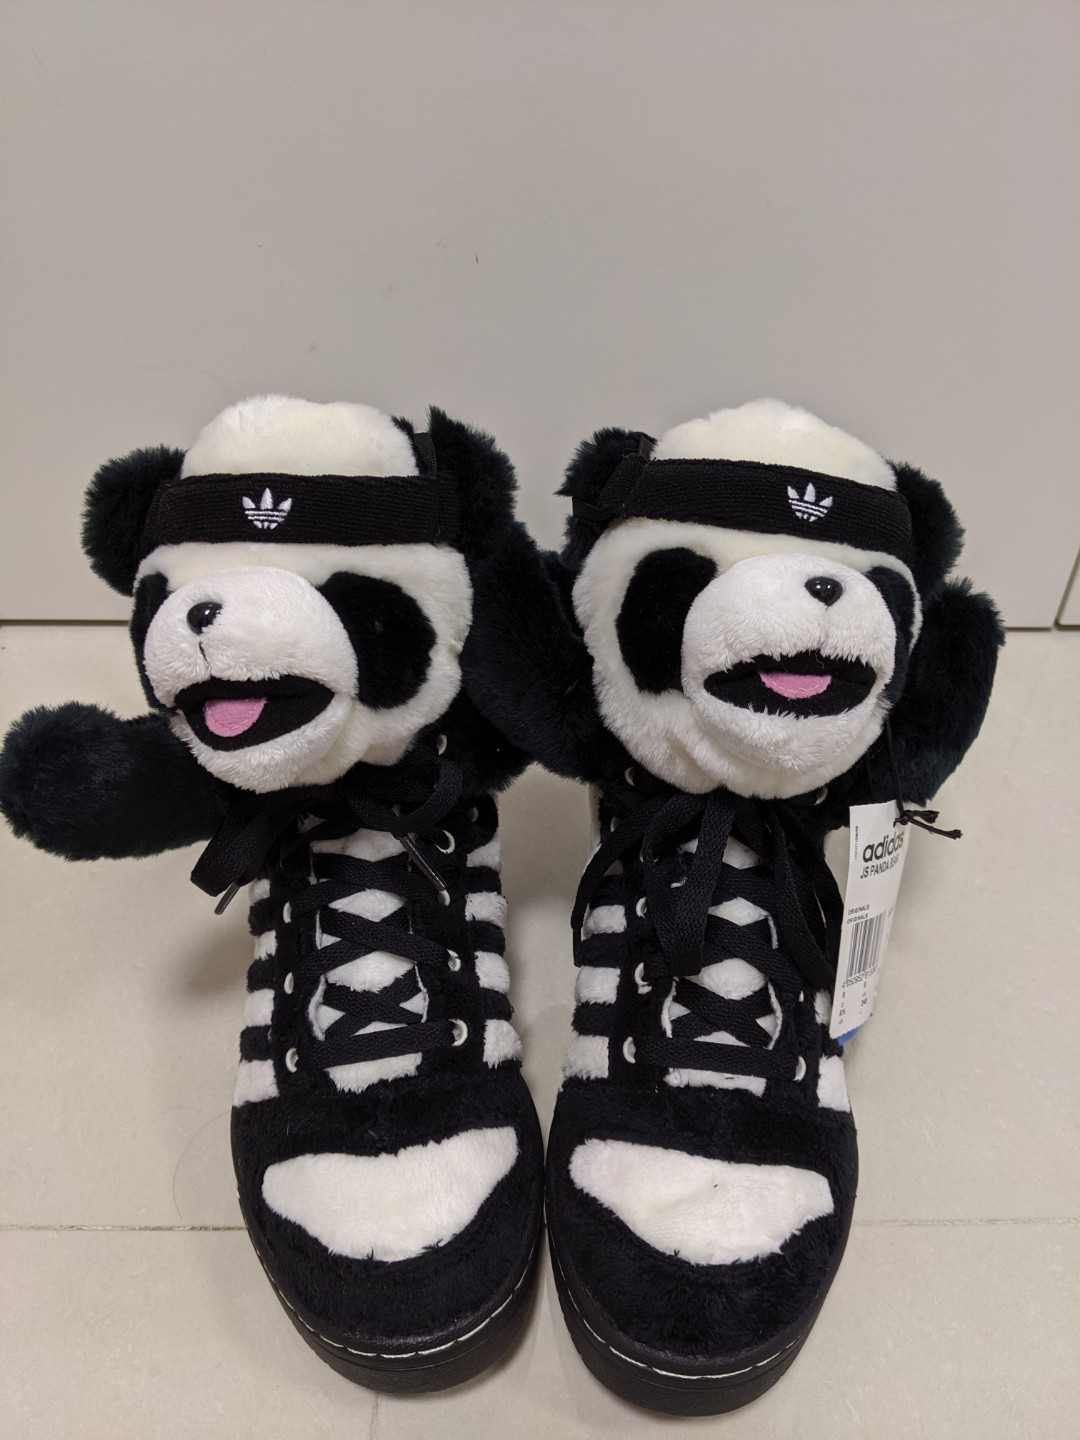 adidas panda shoes